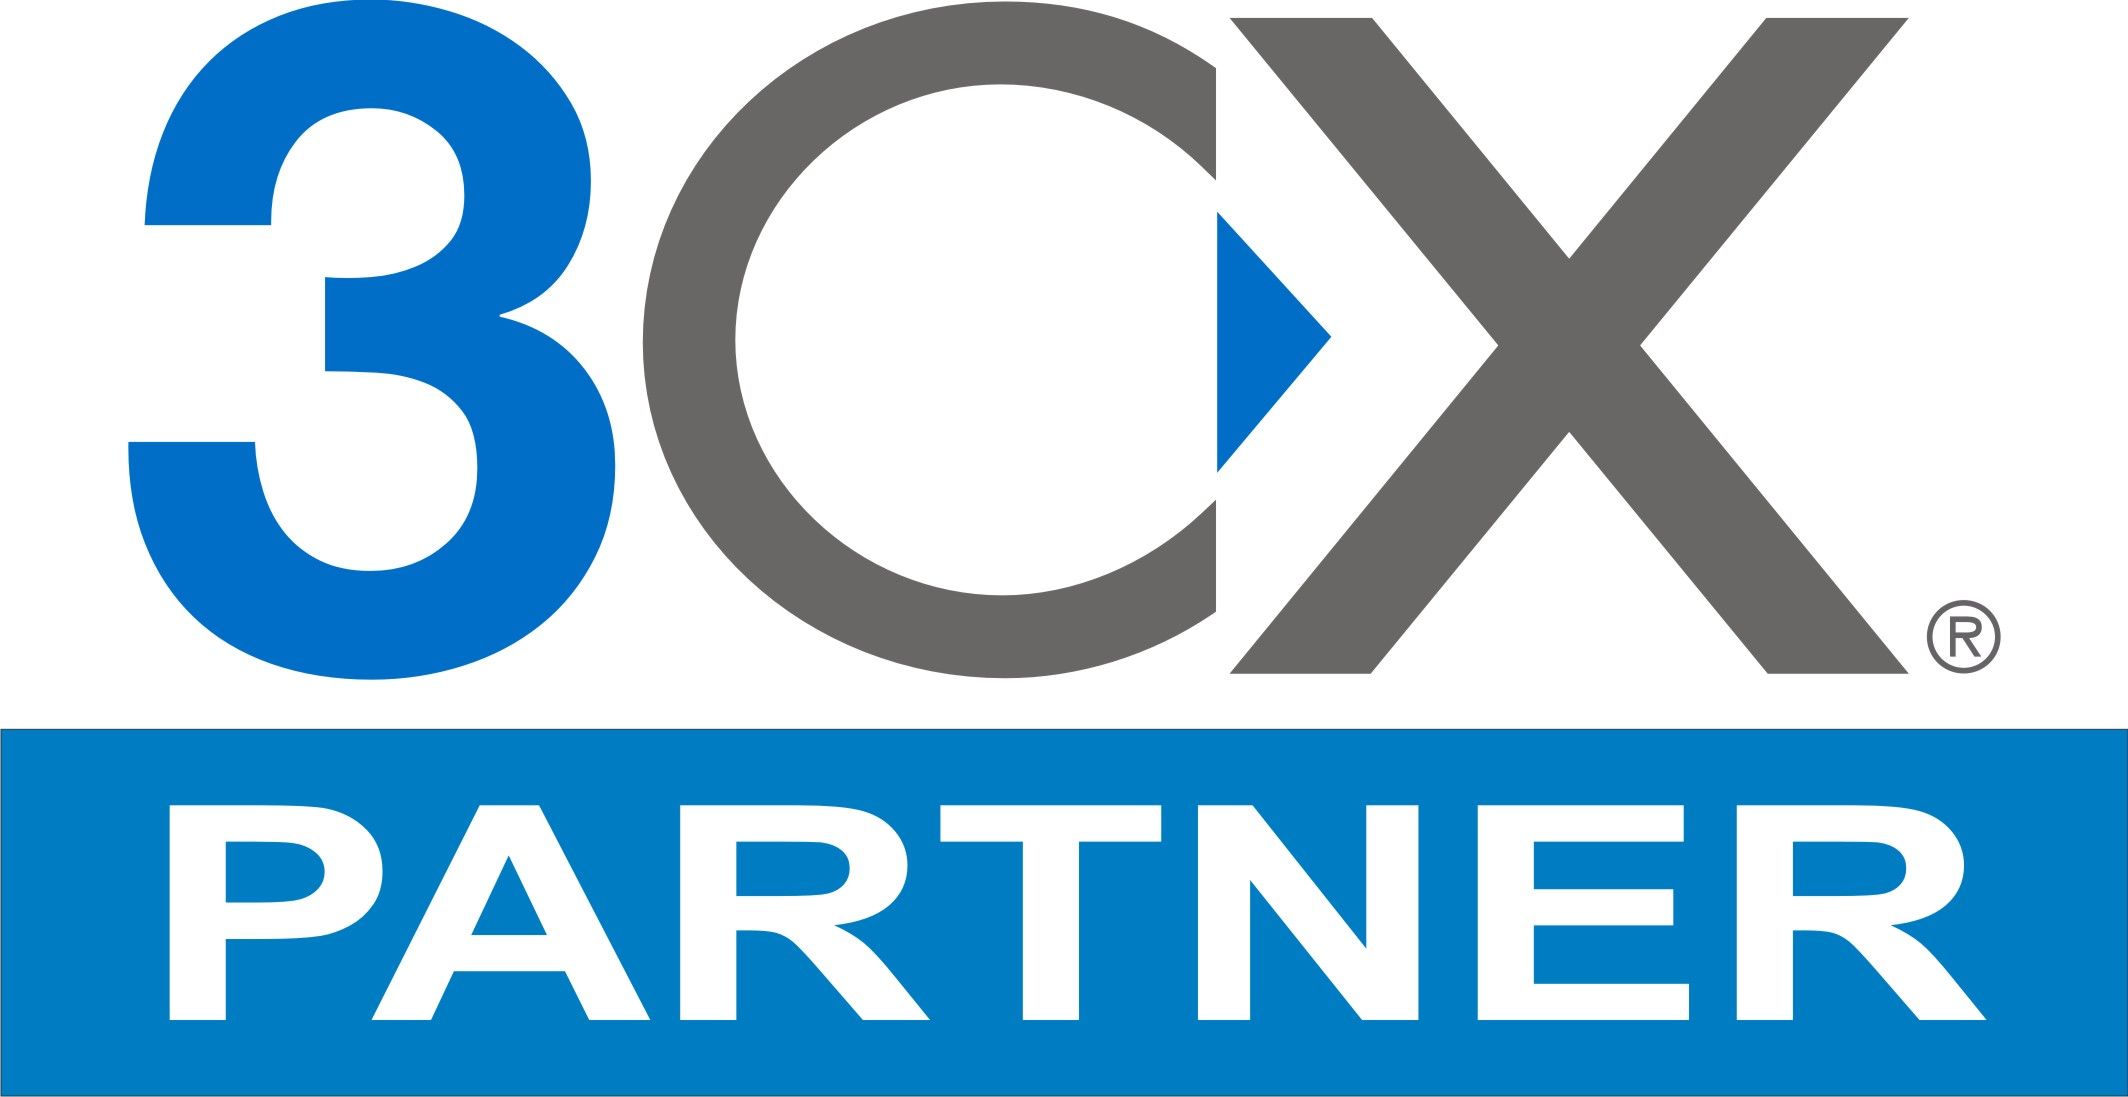 3CX-partner-logo-hd-compressor.jpg